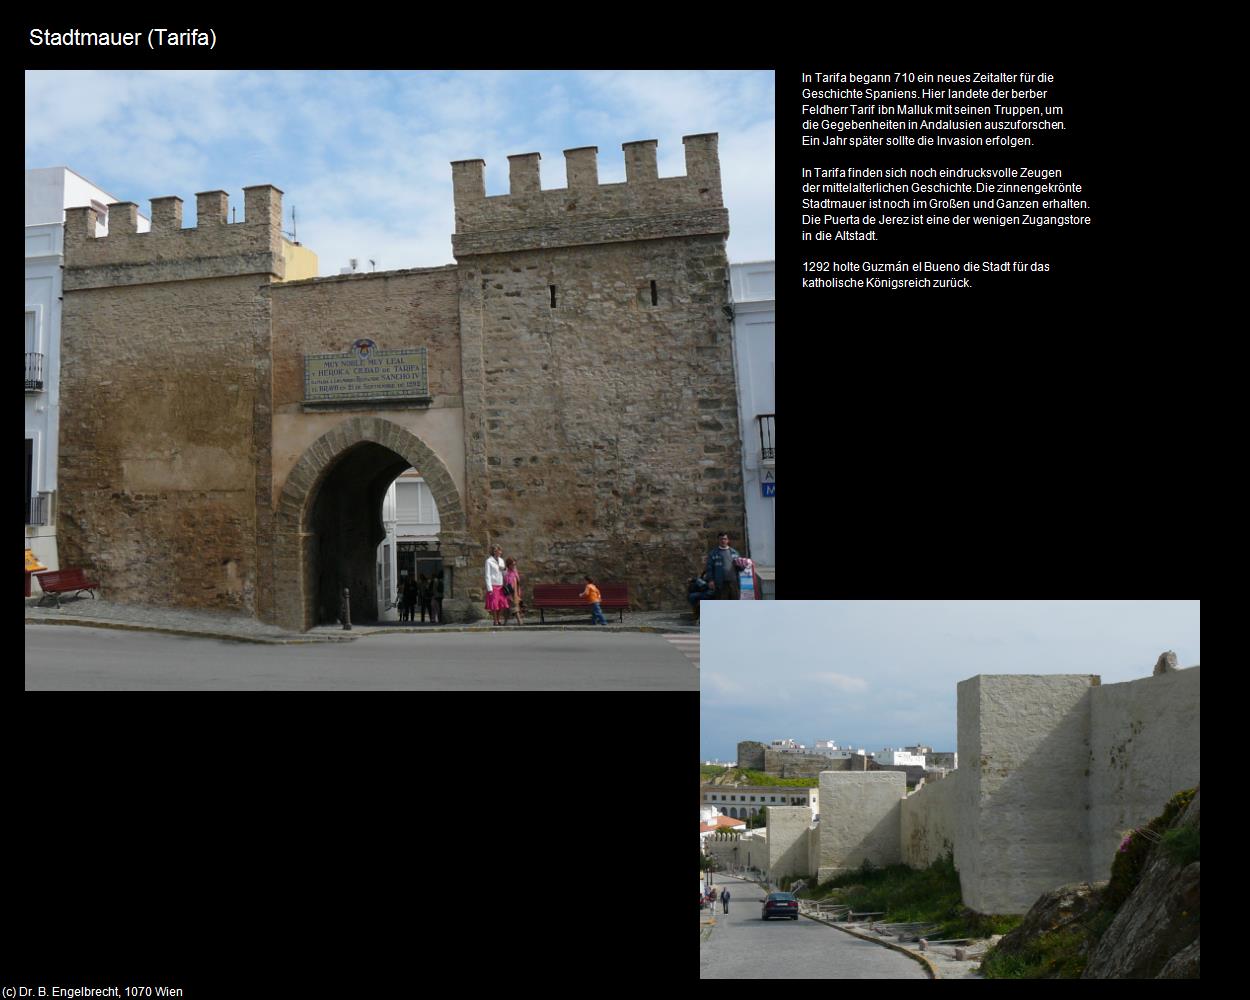 Stadtmauer (Tarifa) in ANDALUSIEN